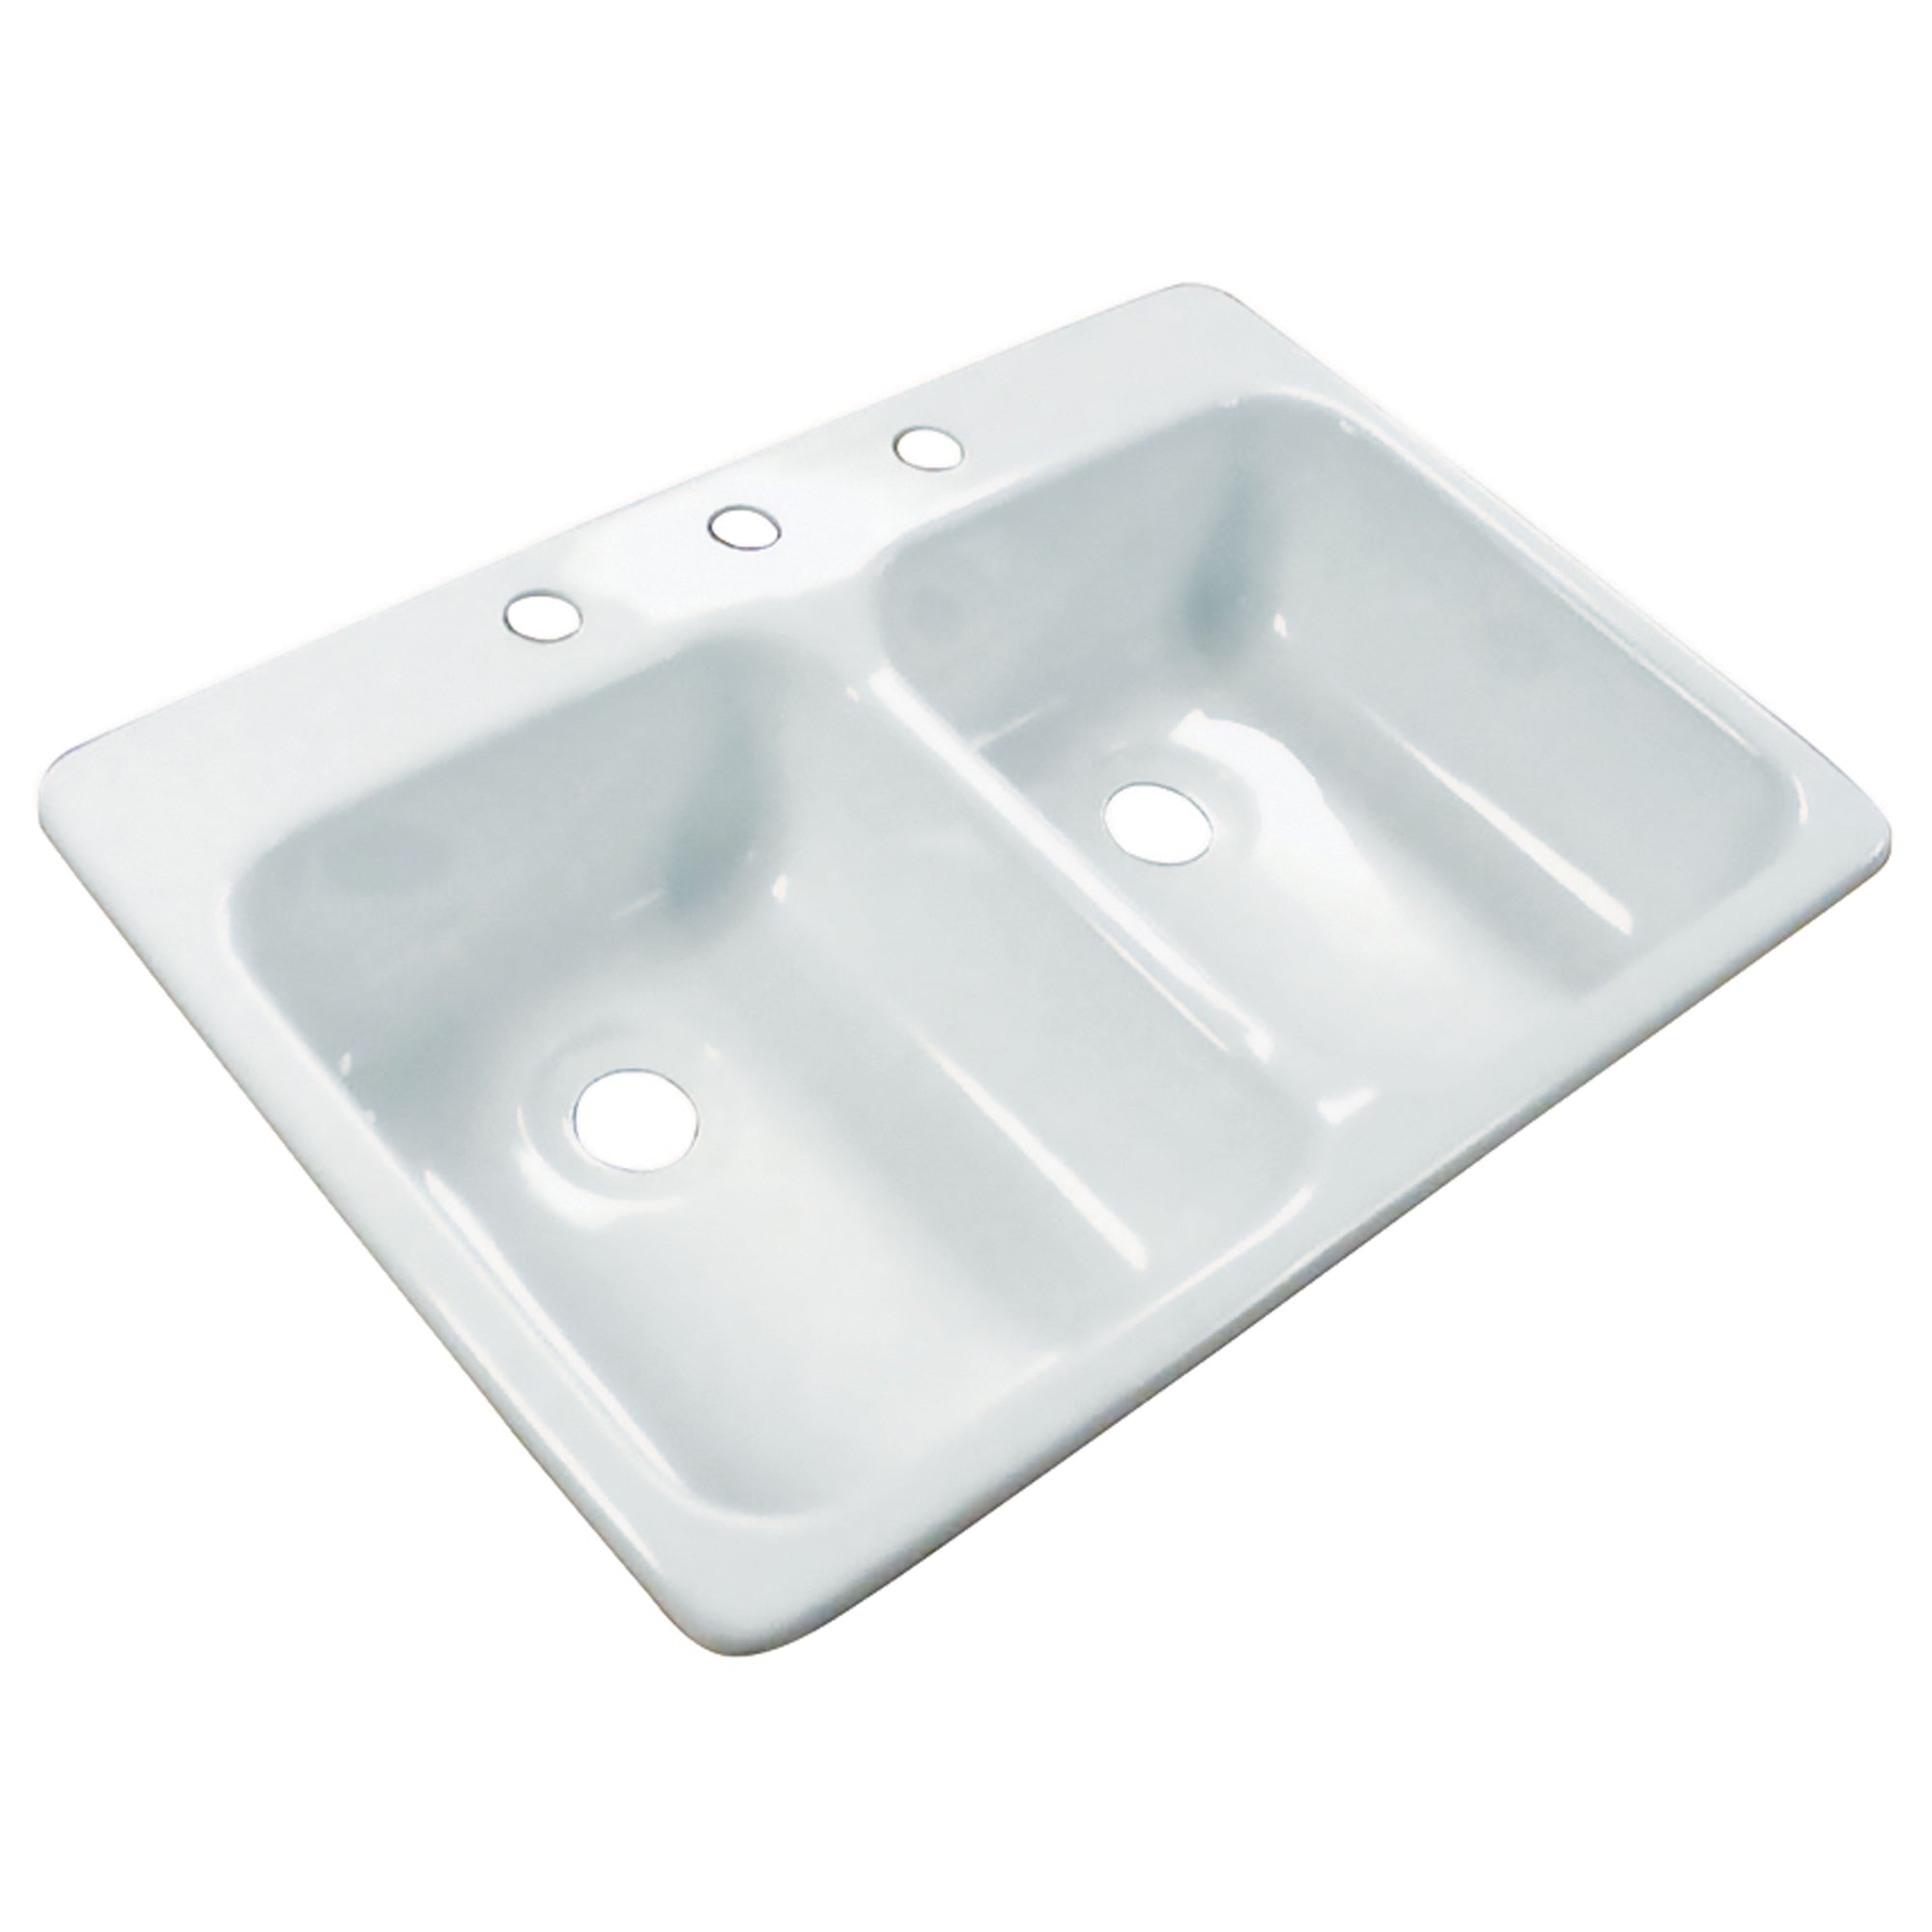 Lippert 209688 Kinro Acrylic Double Sink - White